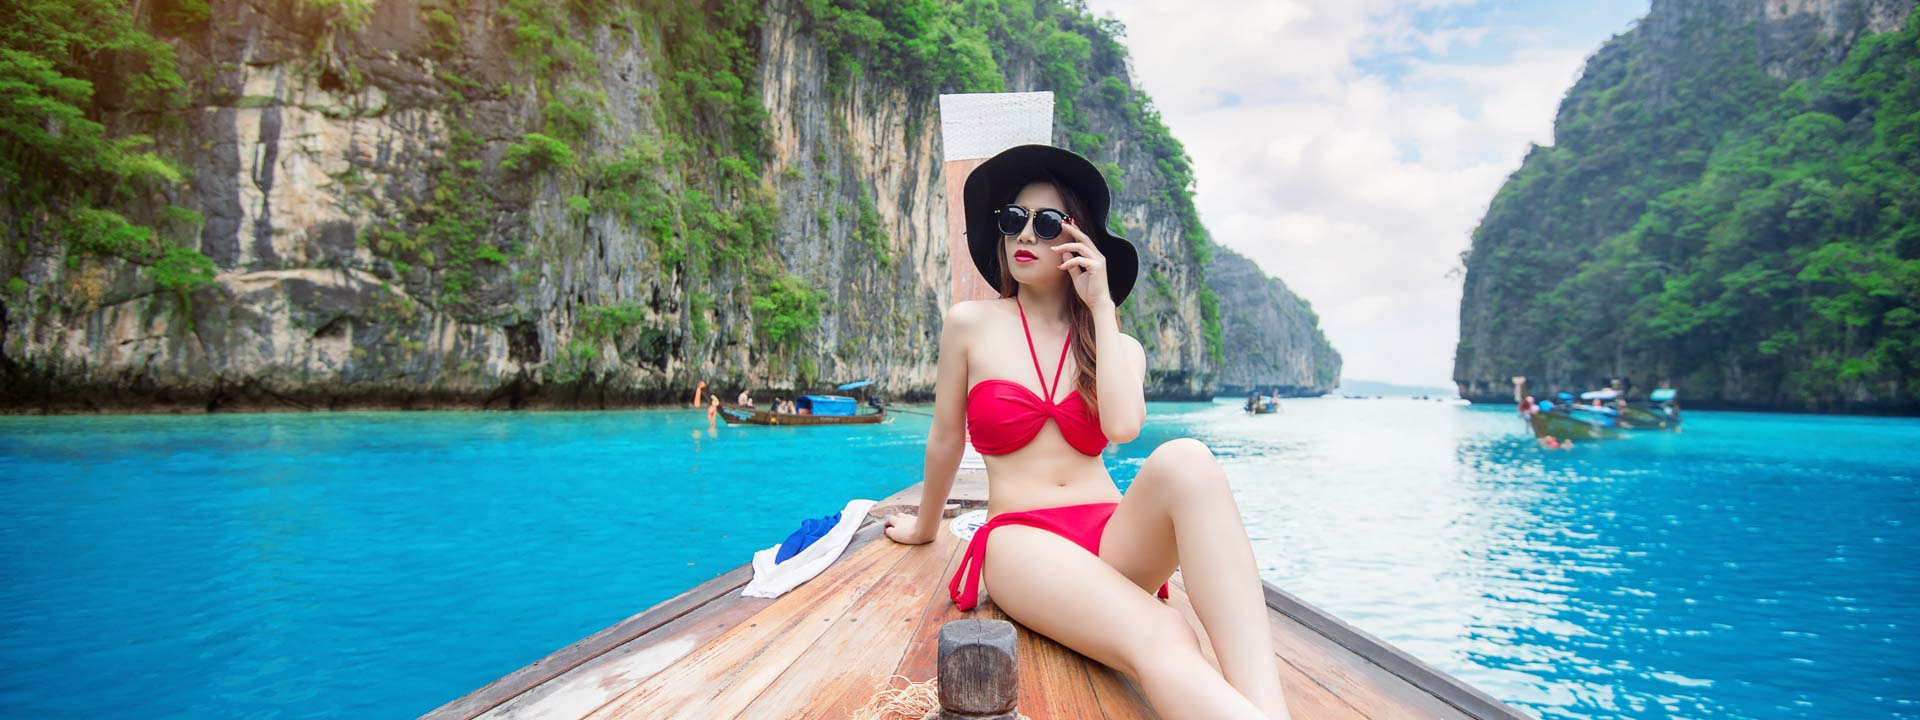 Vietnam Summer Beach Vacation 5 star Resort 13 Days